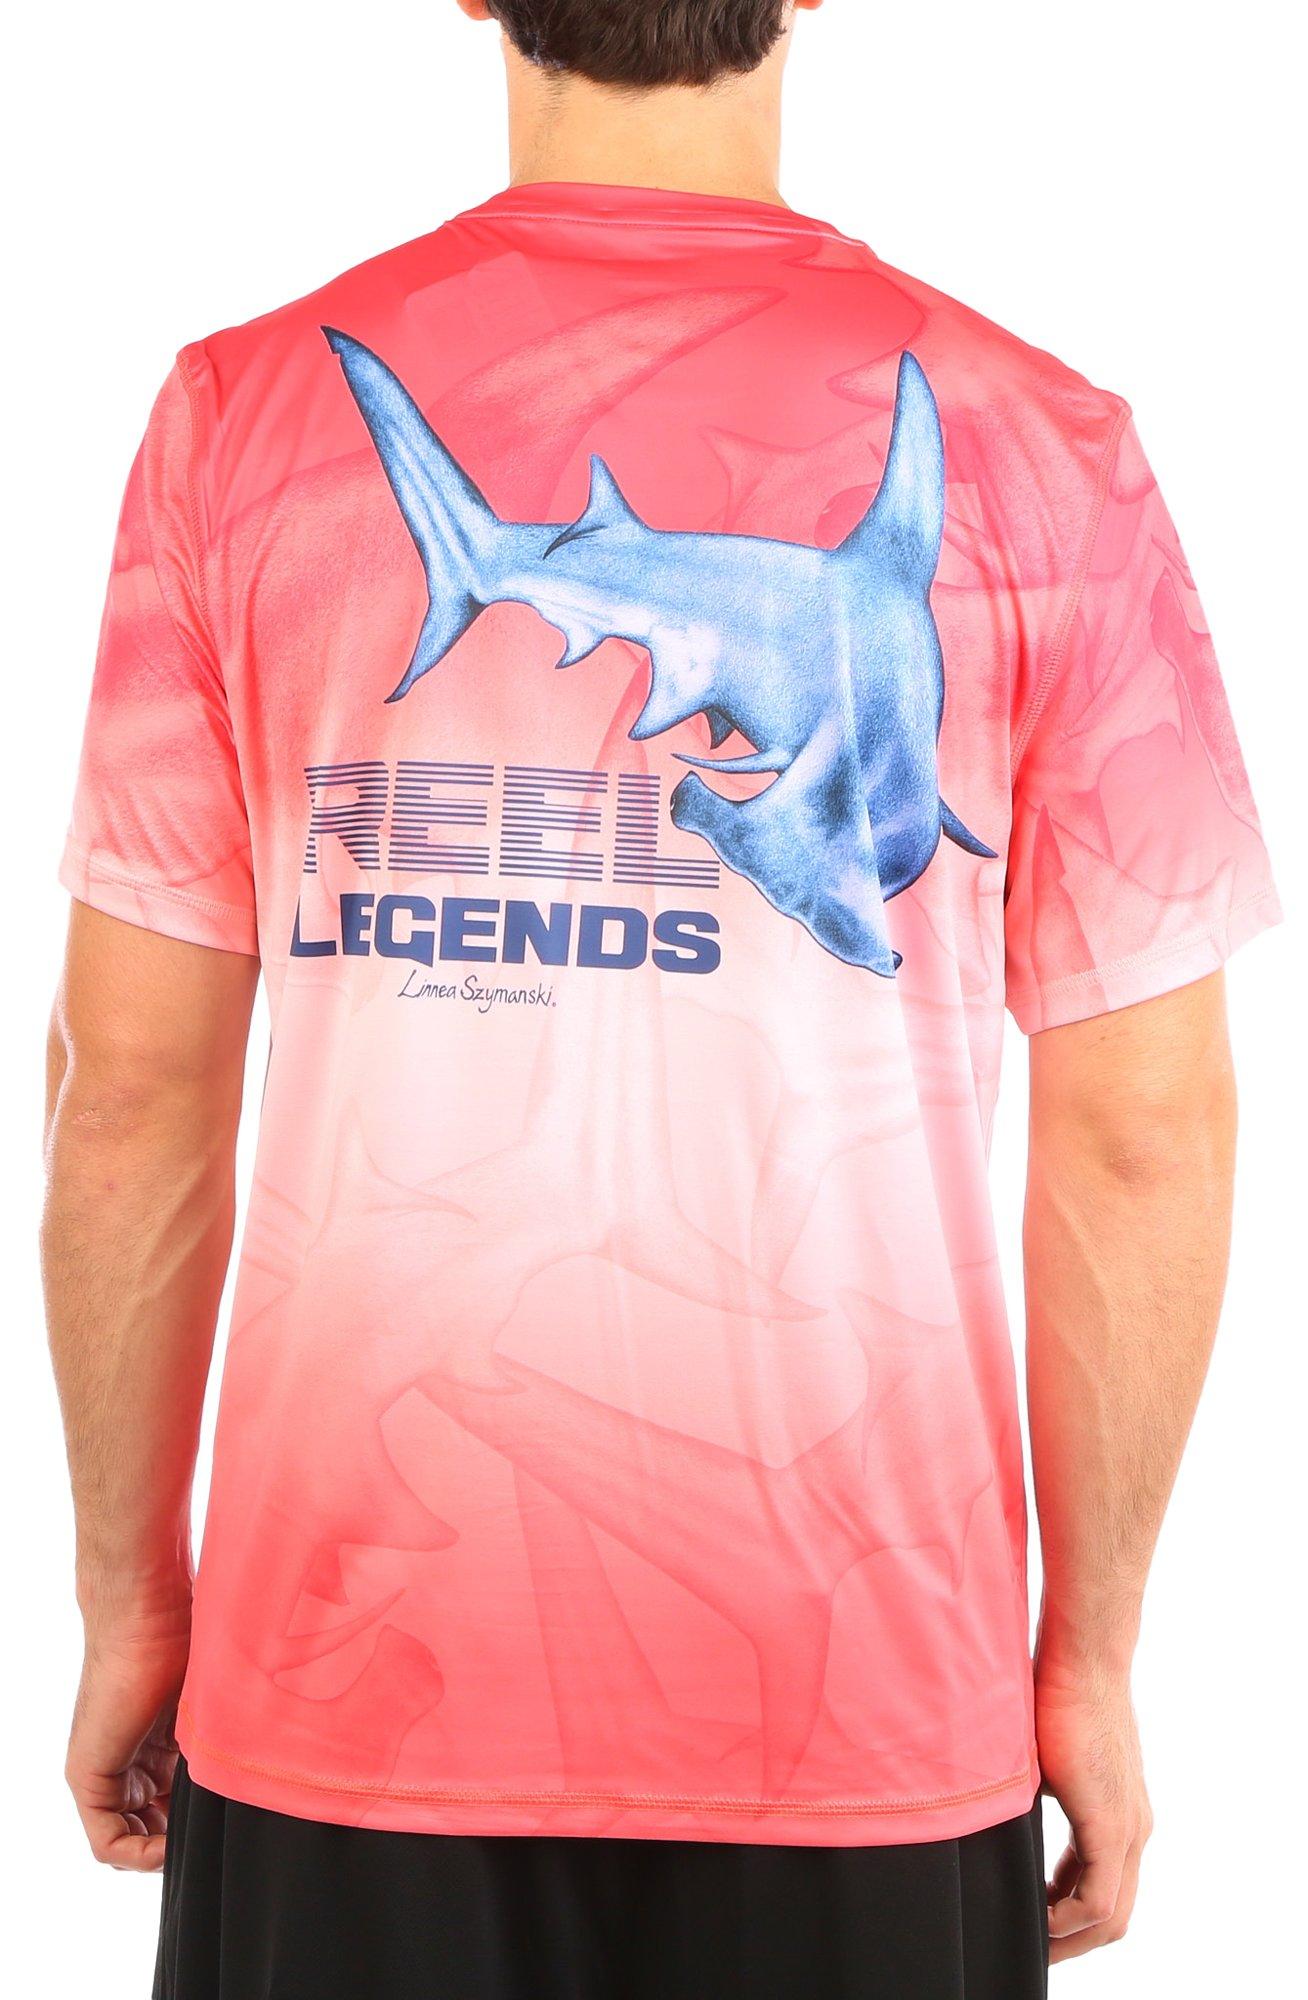 Reel Legends Womens 1X Reel Tec Fantasy Pink Glo Jellyfish Vented